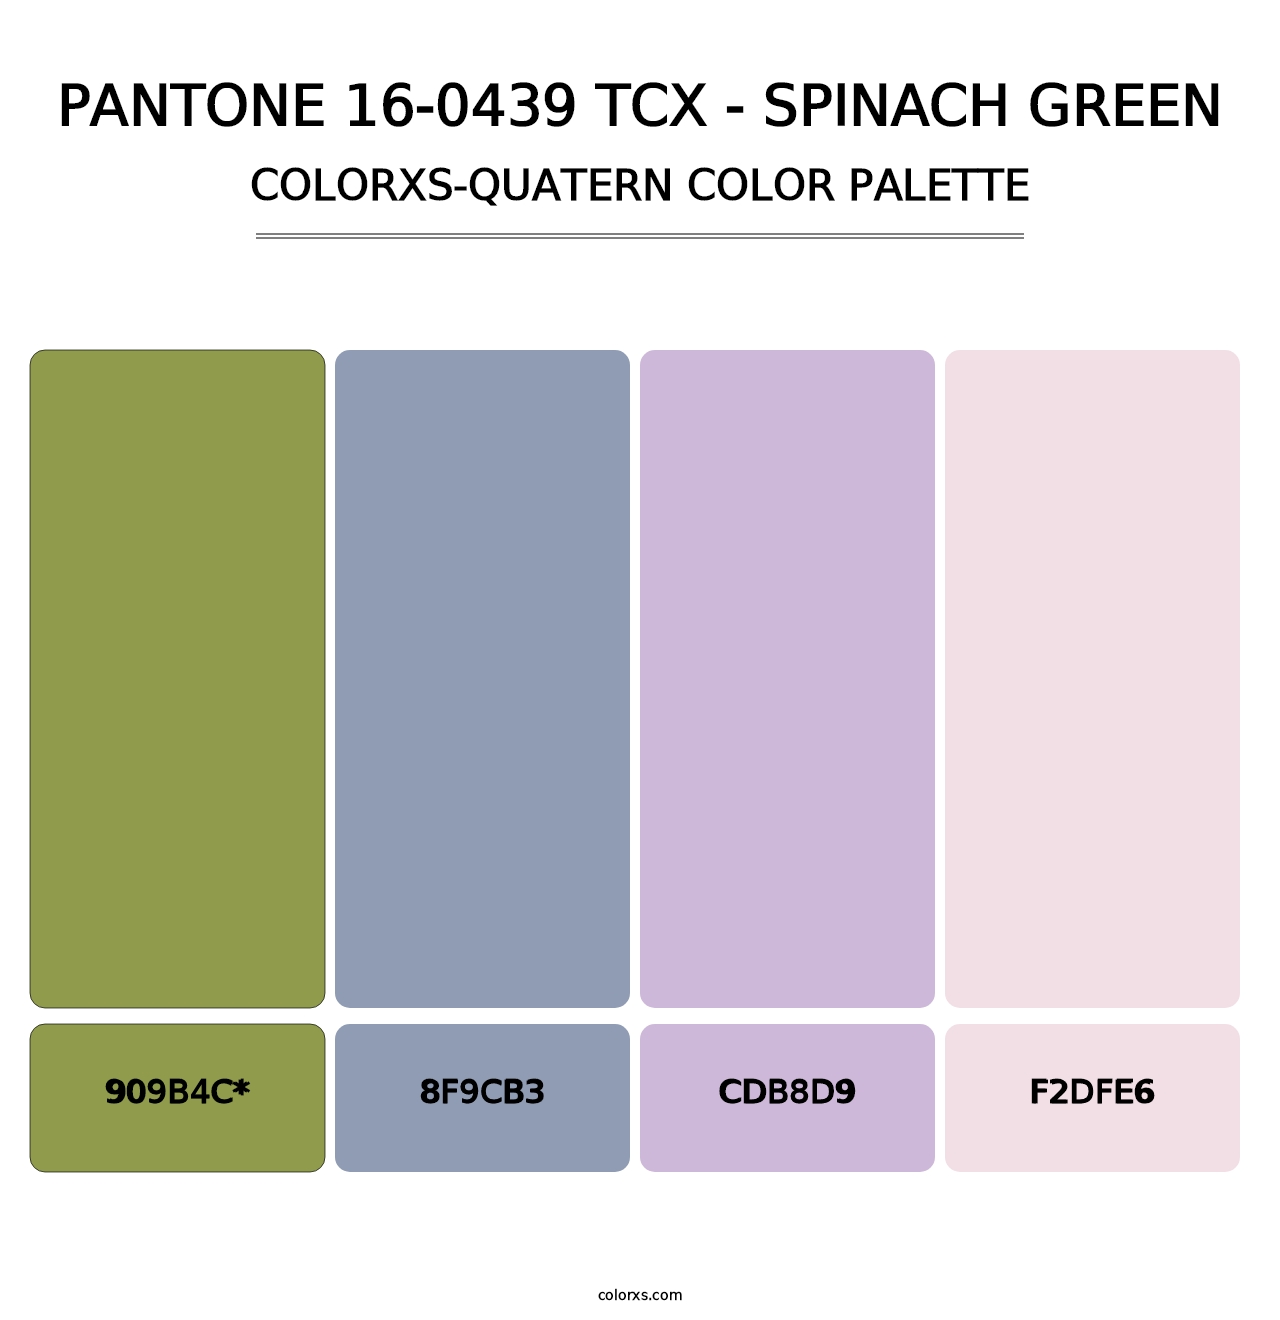 PANTONE 16-0439 TCX - Spinach Green - Colorxs Quatern Palette